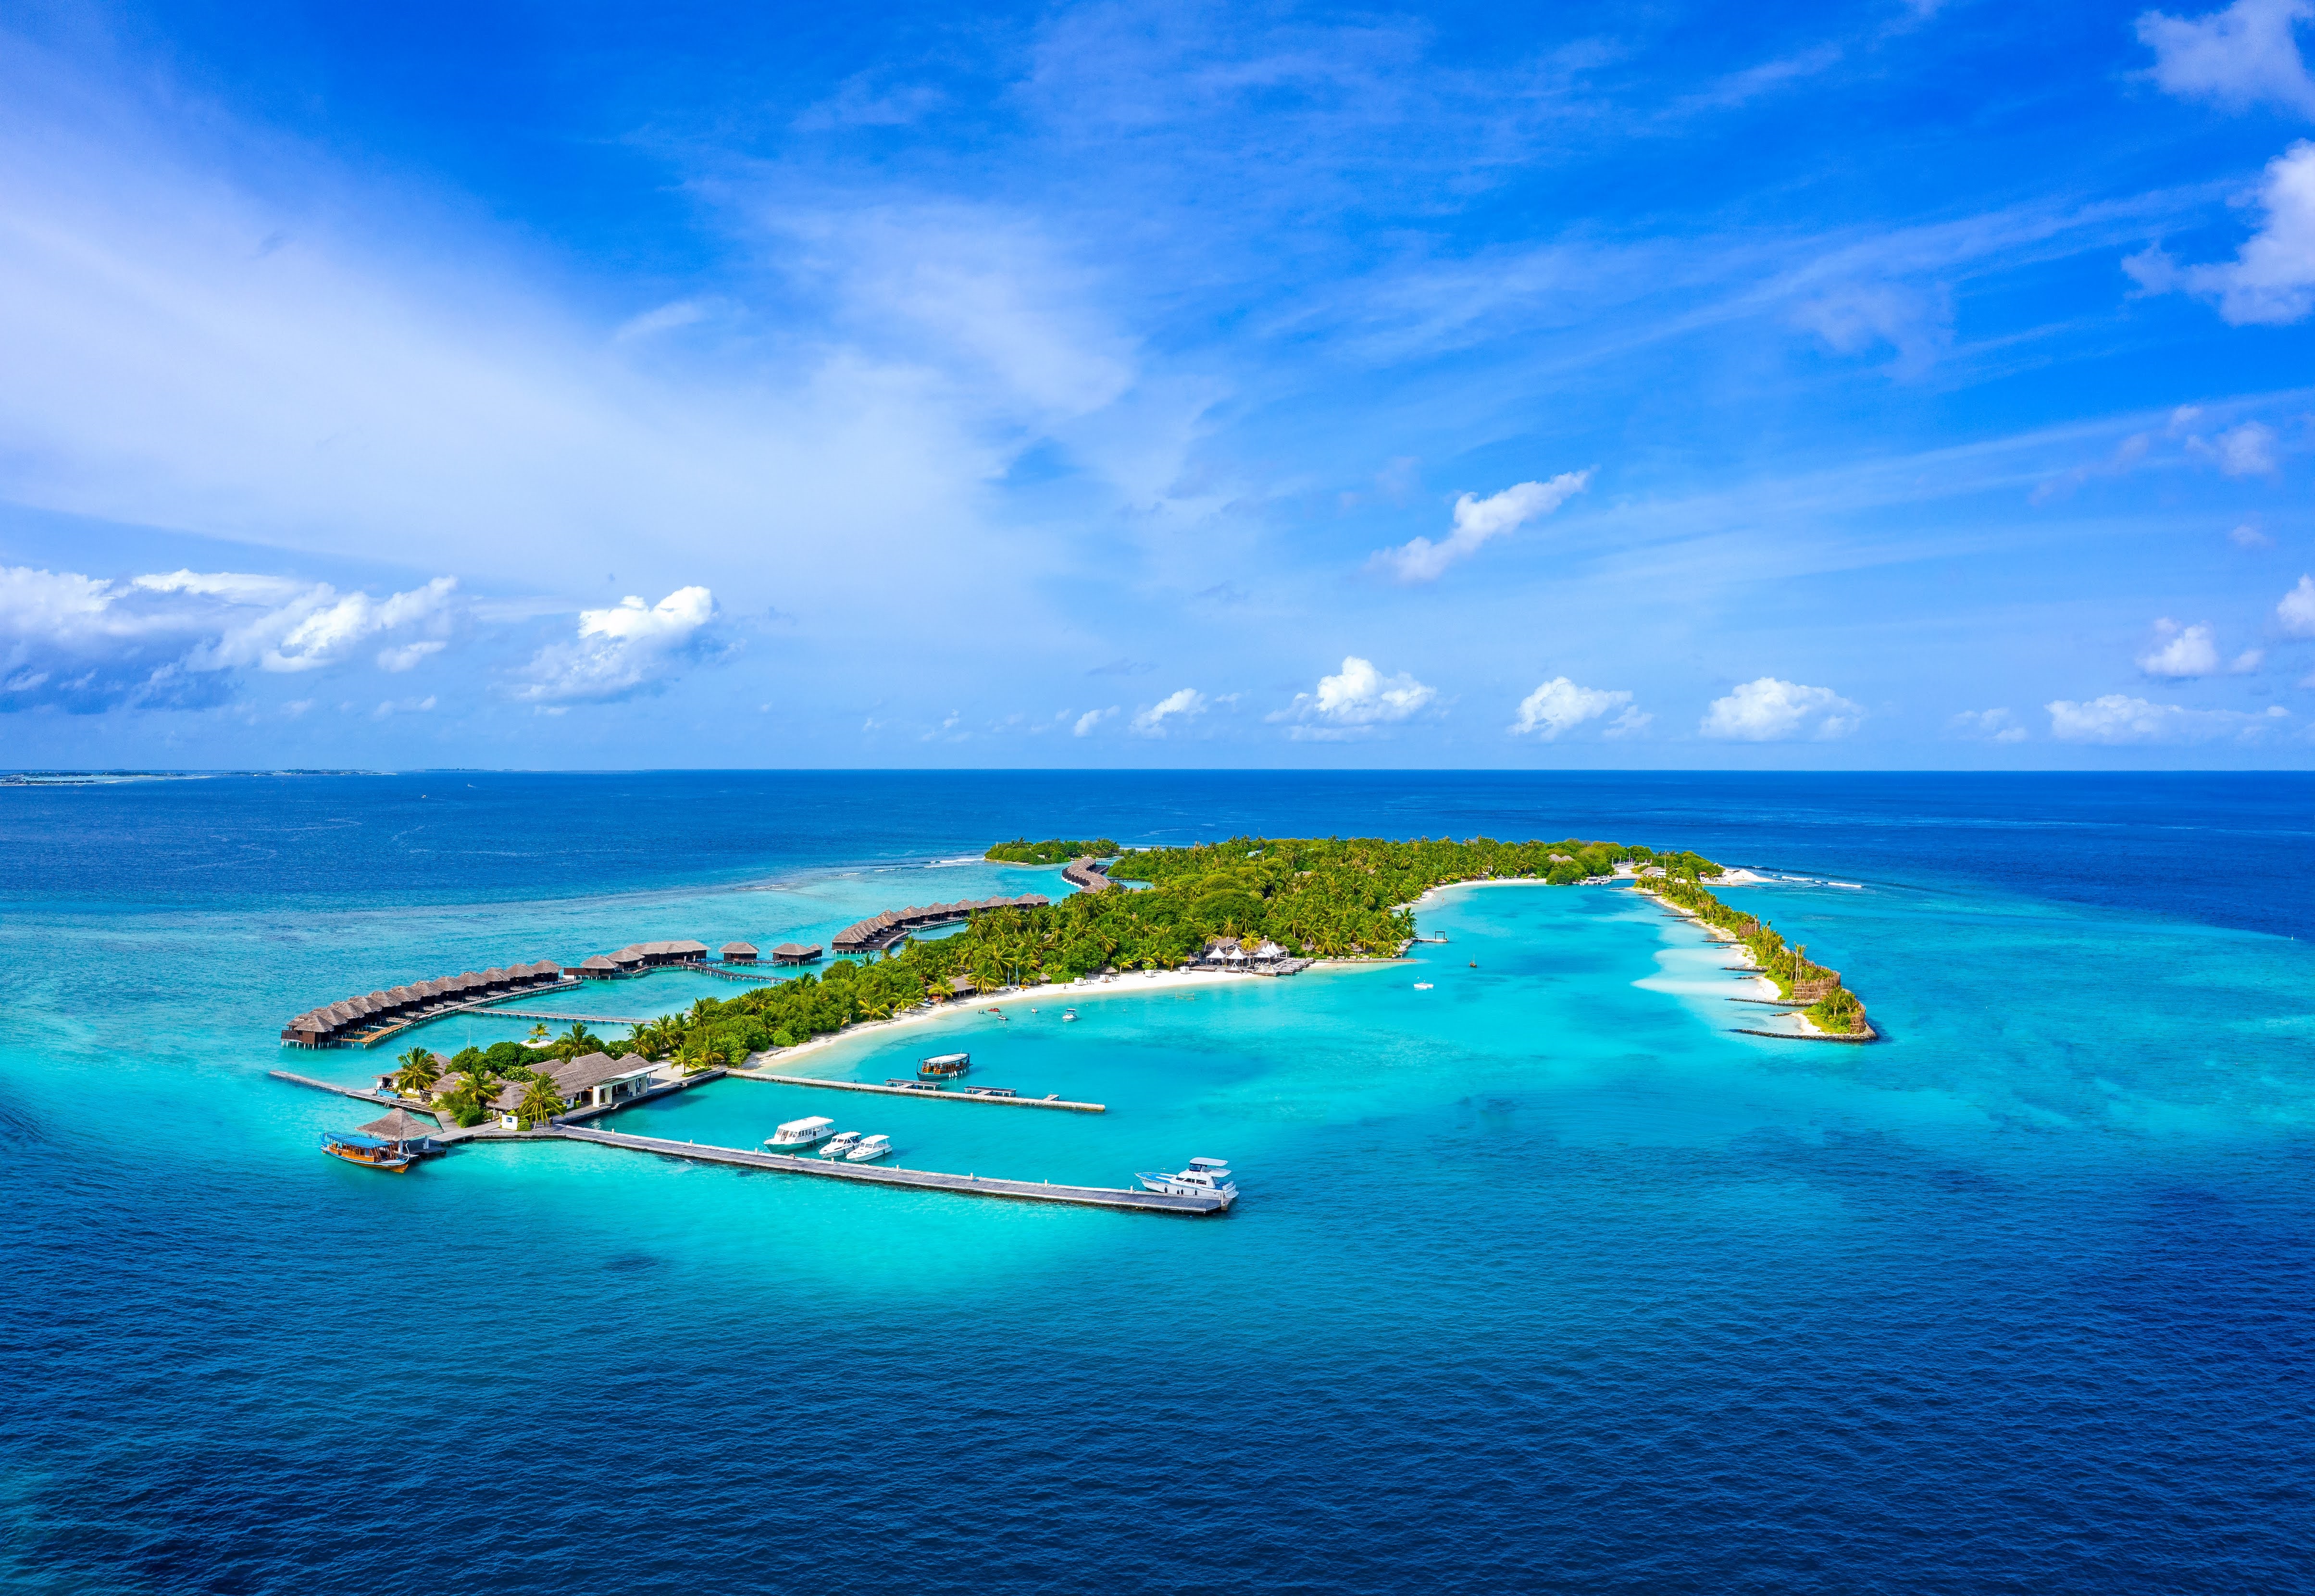 Beautiful, clear waters and pristine sandy beaches make Furanafushi island in The Maldives a stunning destination